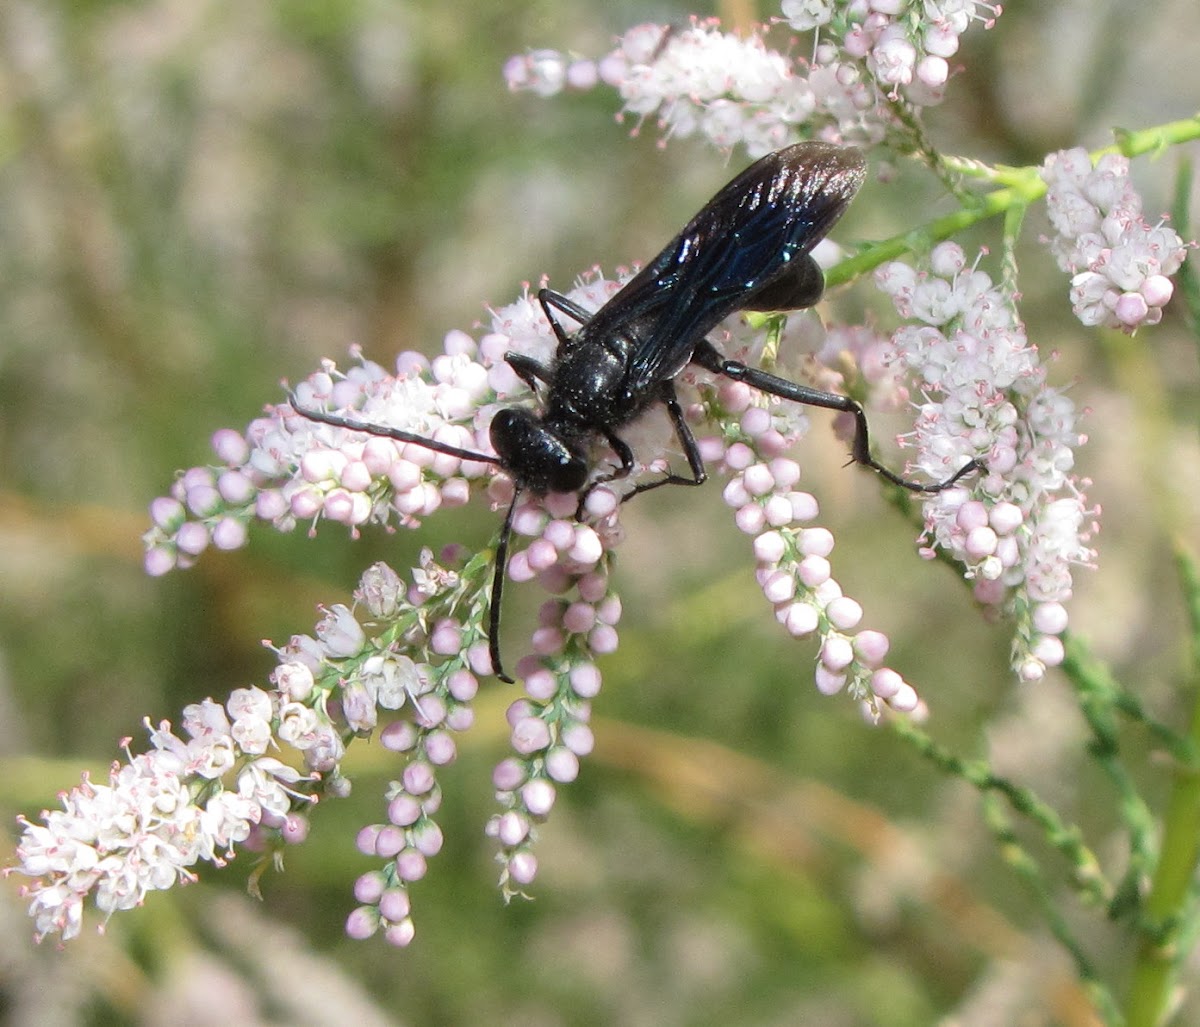 Sphecid wasp (male)